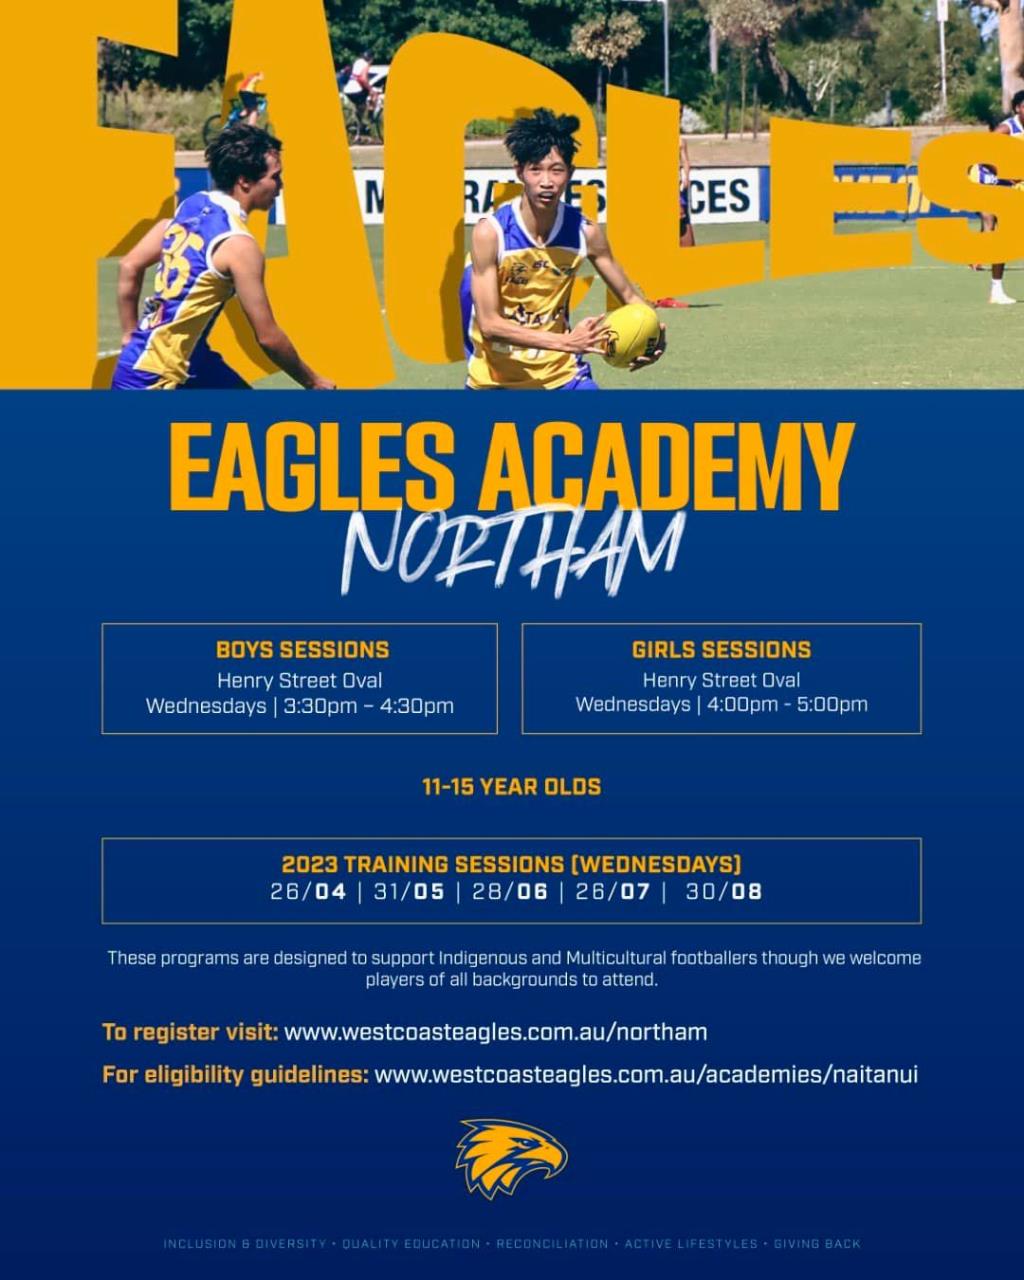 Northam Eagles Academy